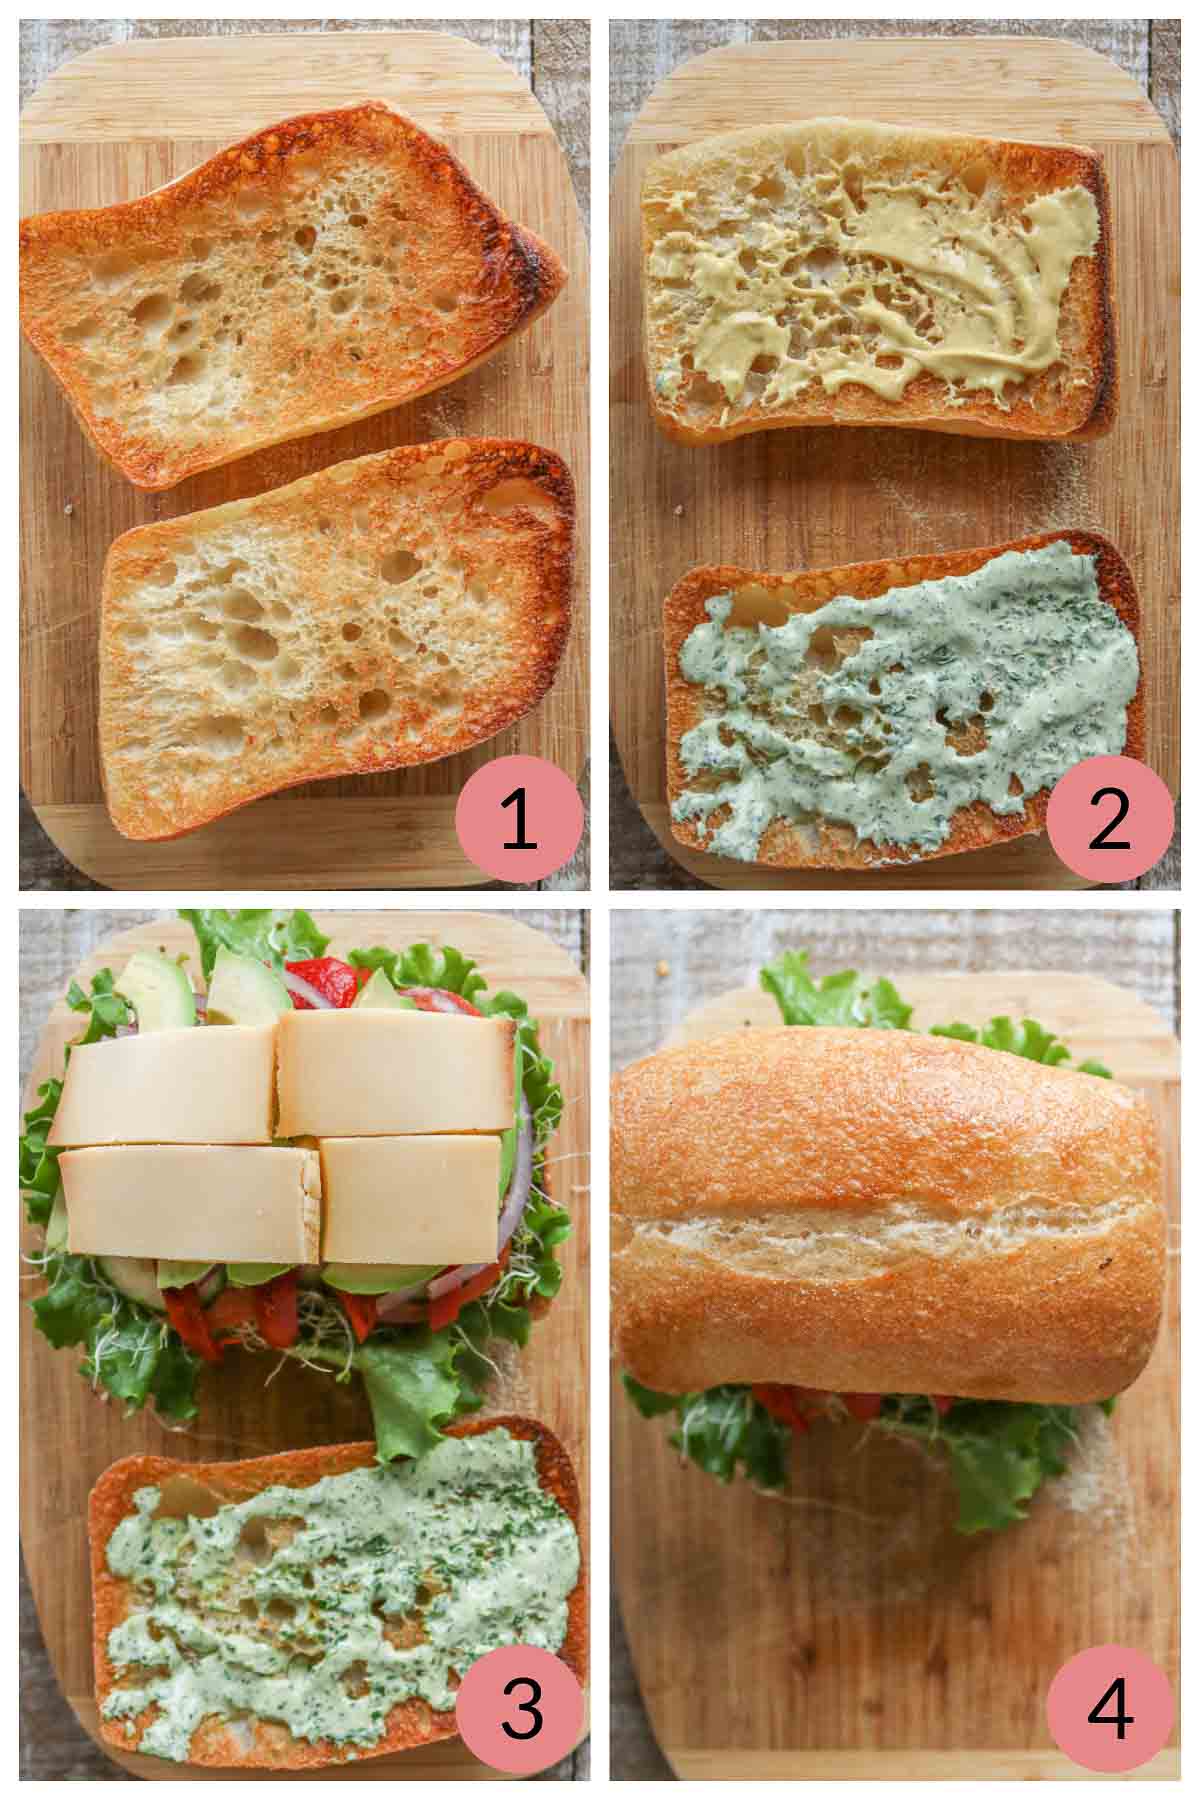 Collage of steps to make a veggie sandwich on a ciabatta bun.